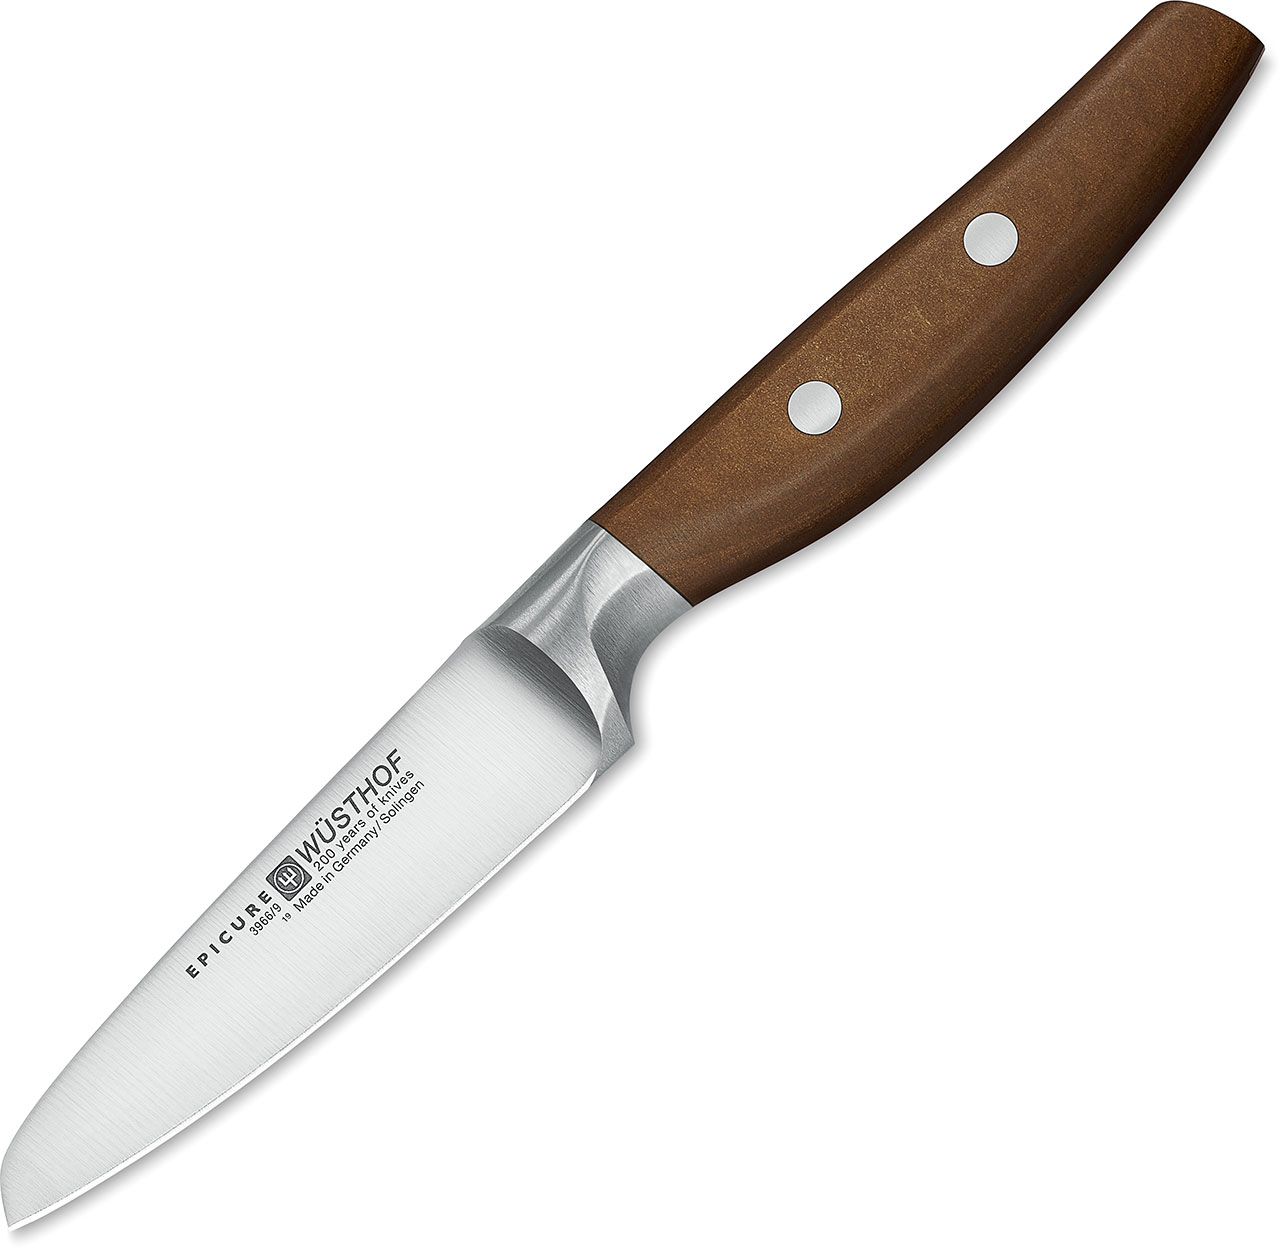 Wüsthof Epicure Paring Knife 9cm 3966/9 1010600409